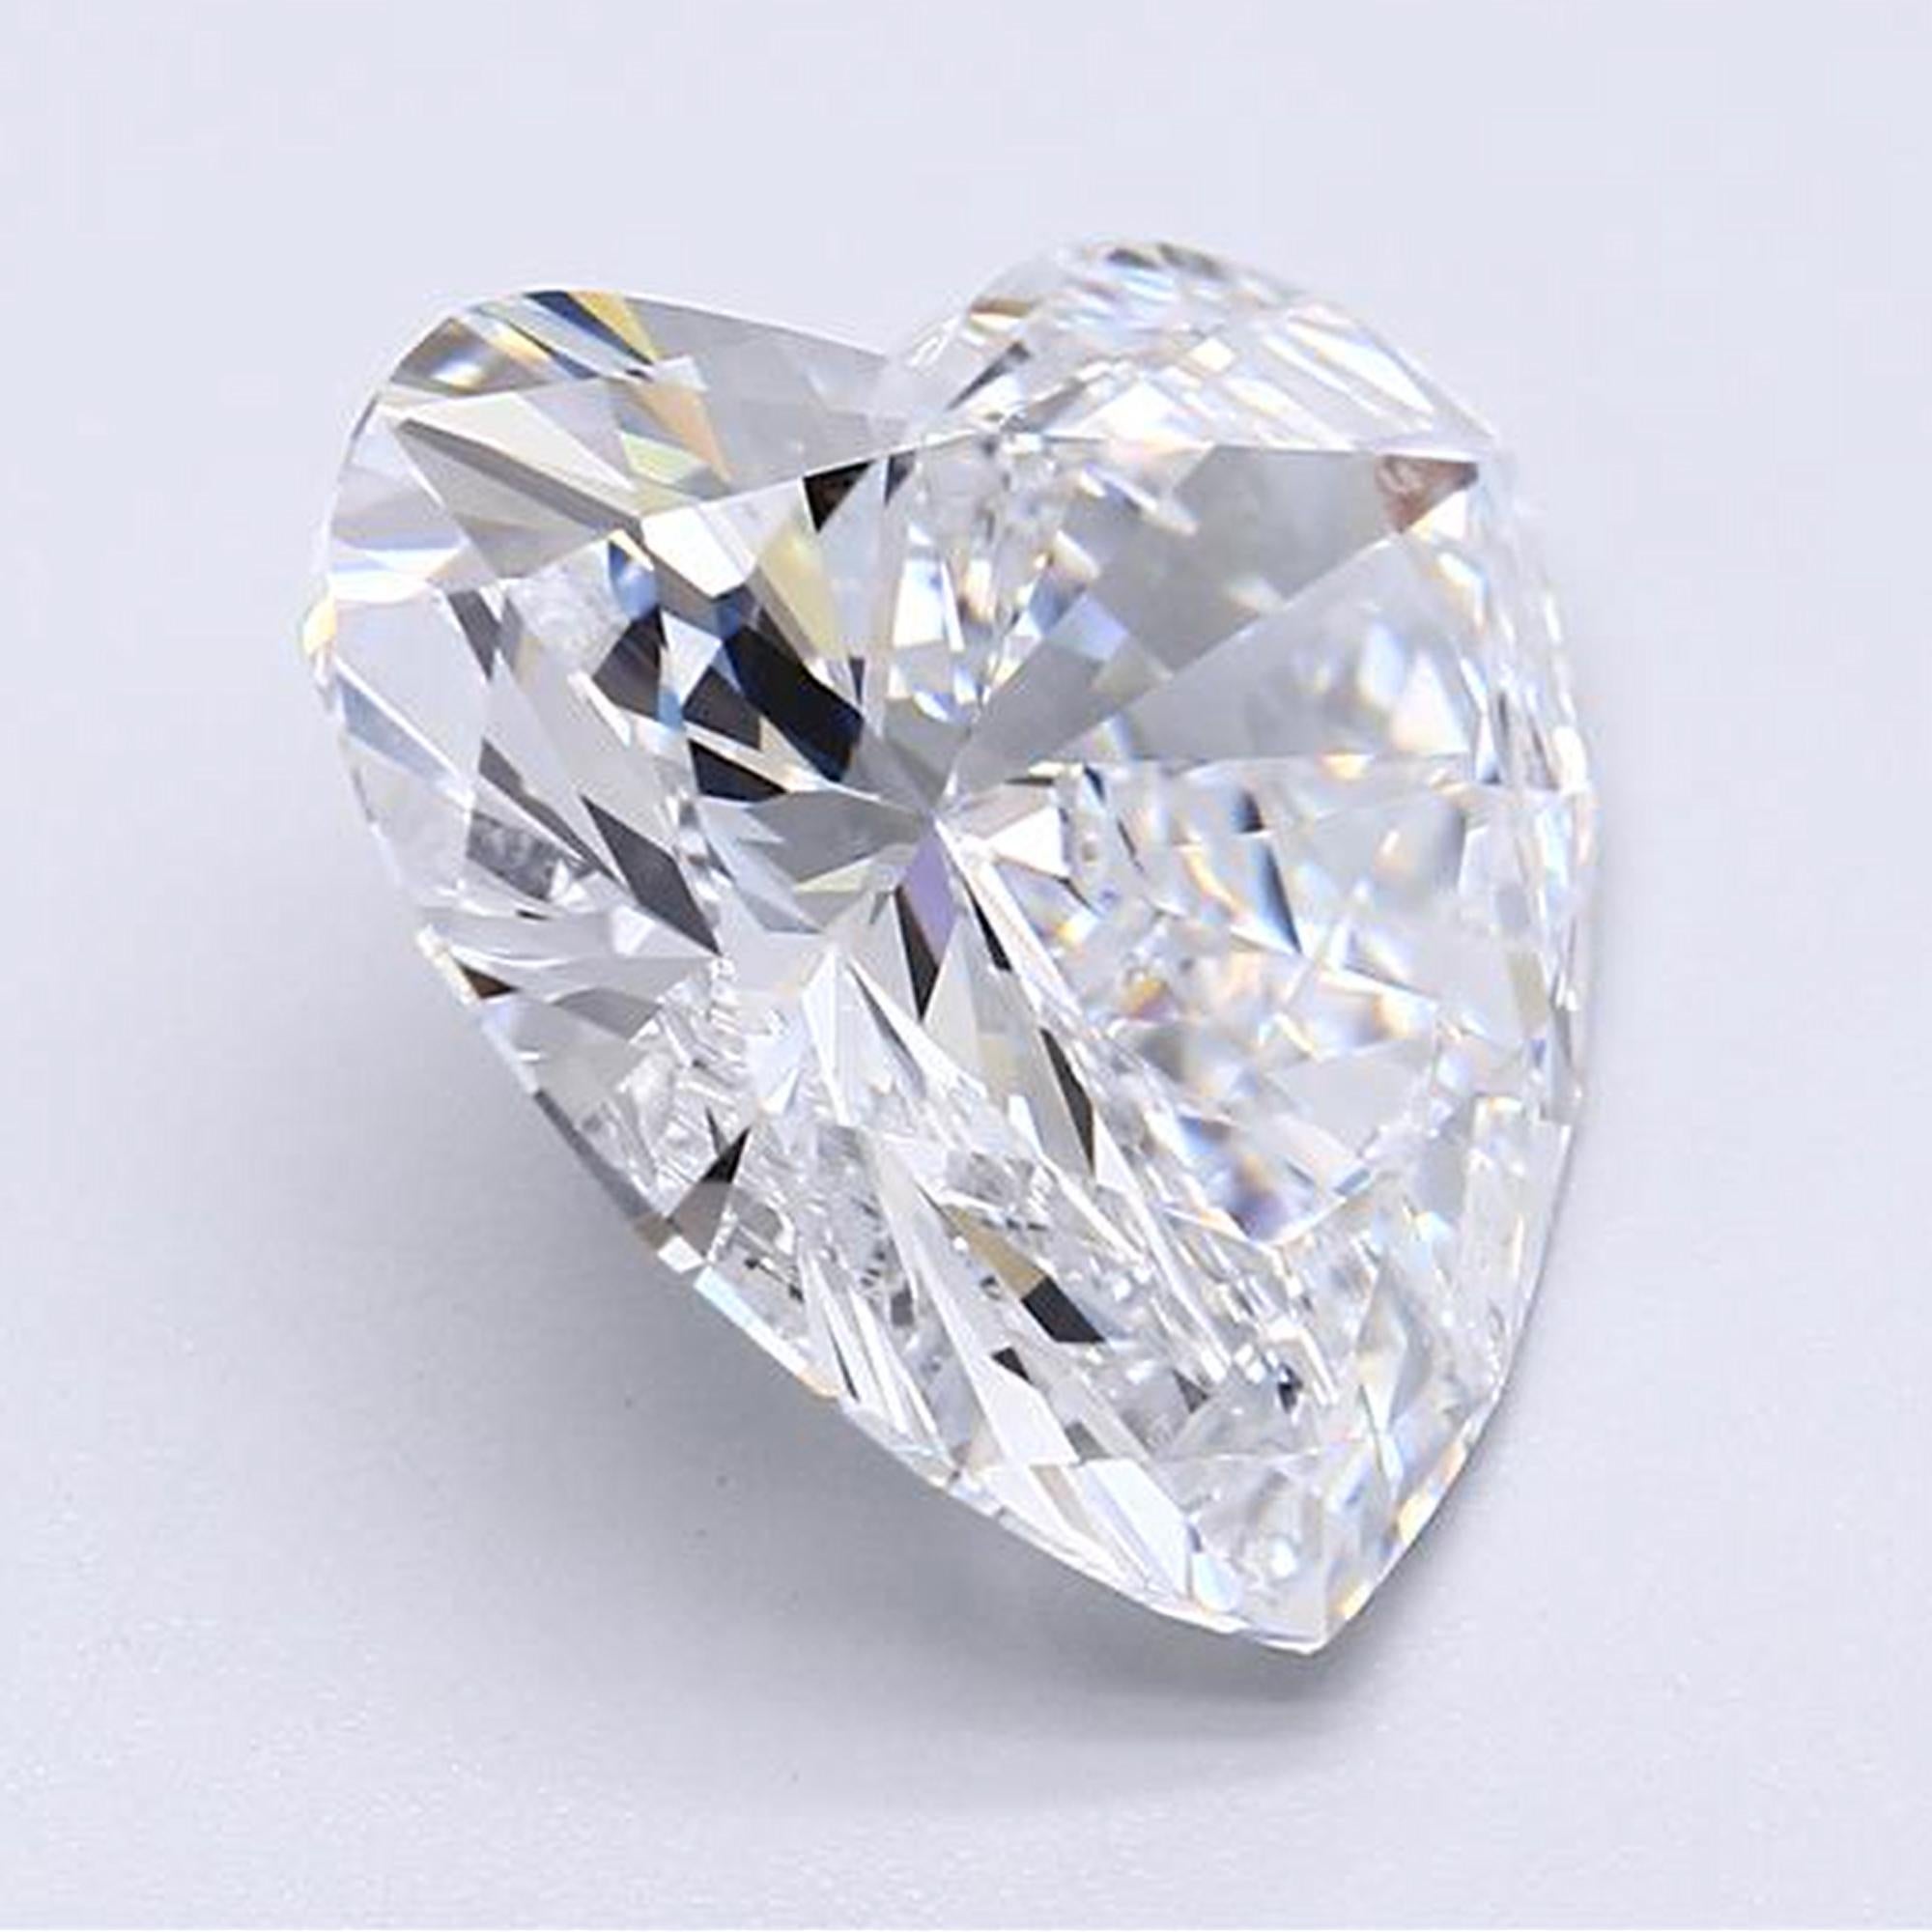 Heart Cut 5.88 Carat Heart Shape Diamond GIA Certified For Sale